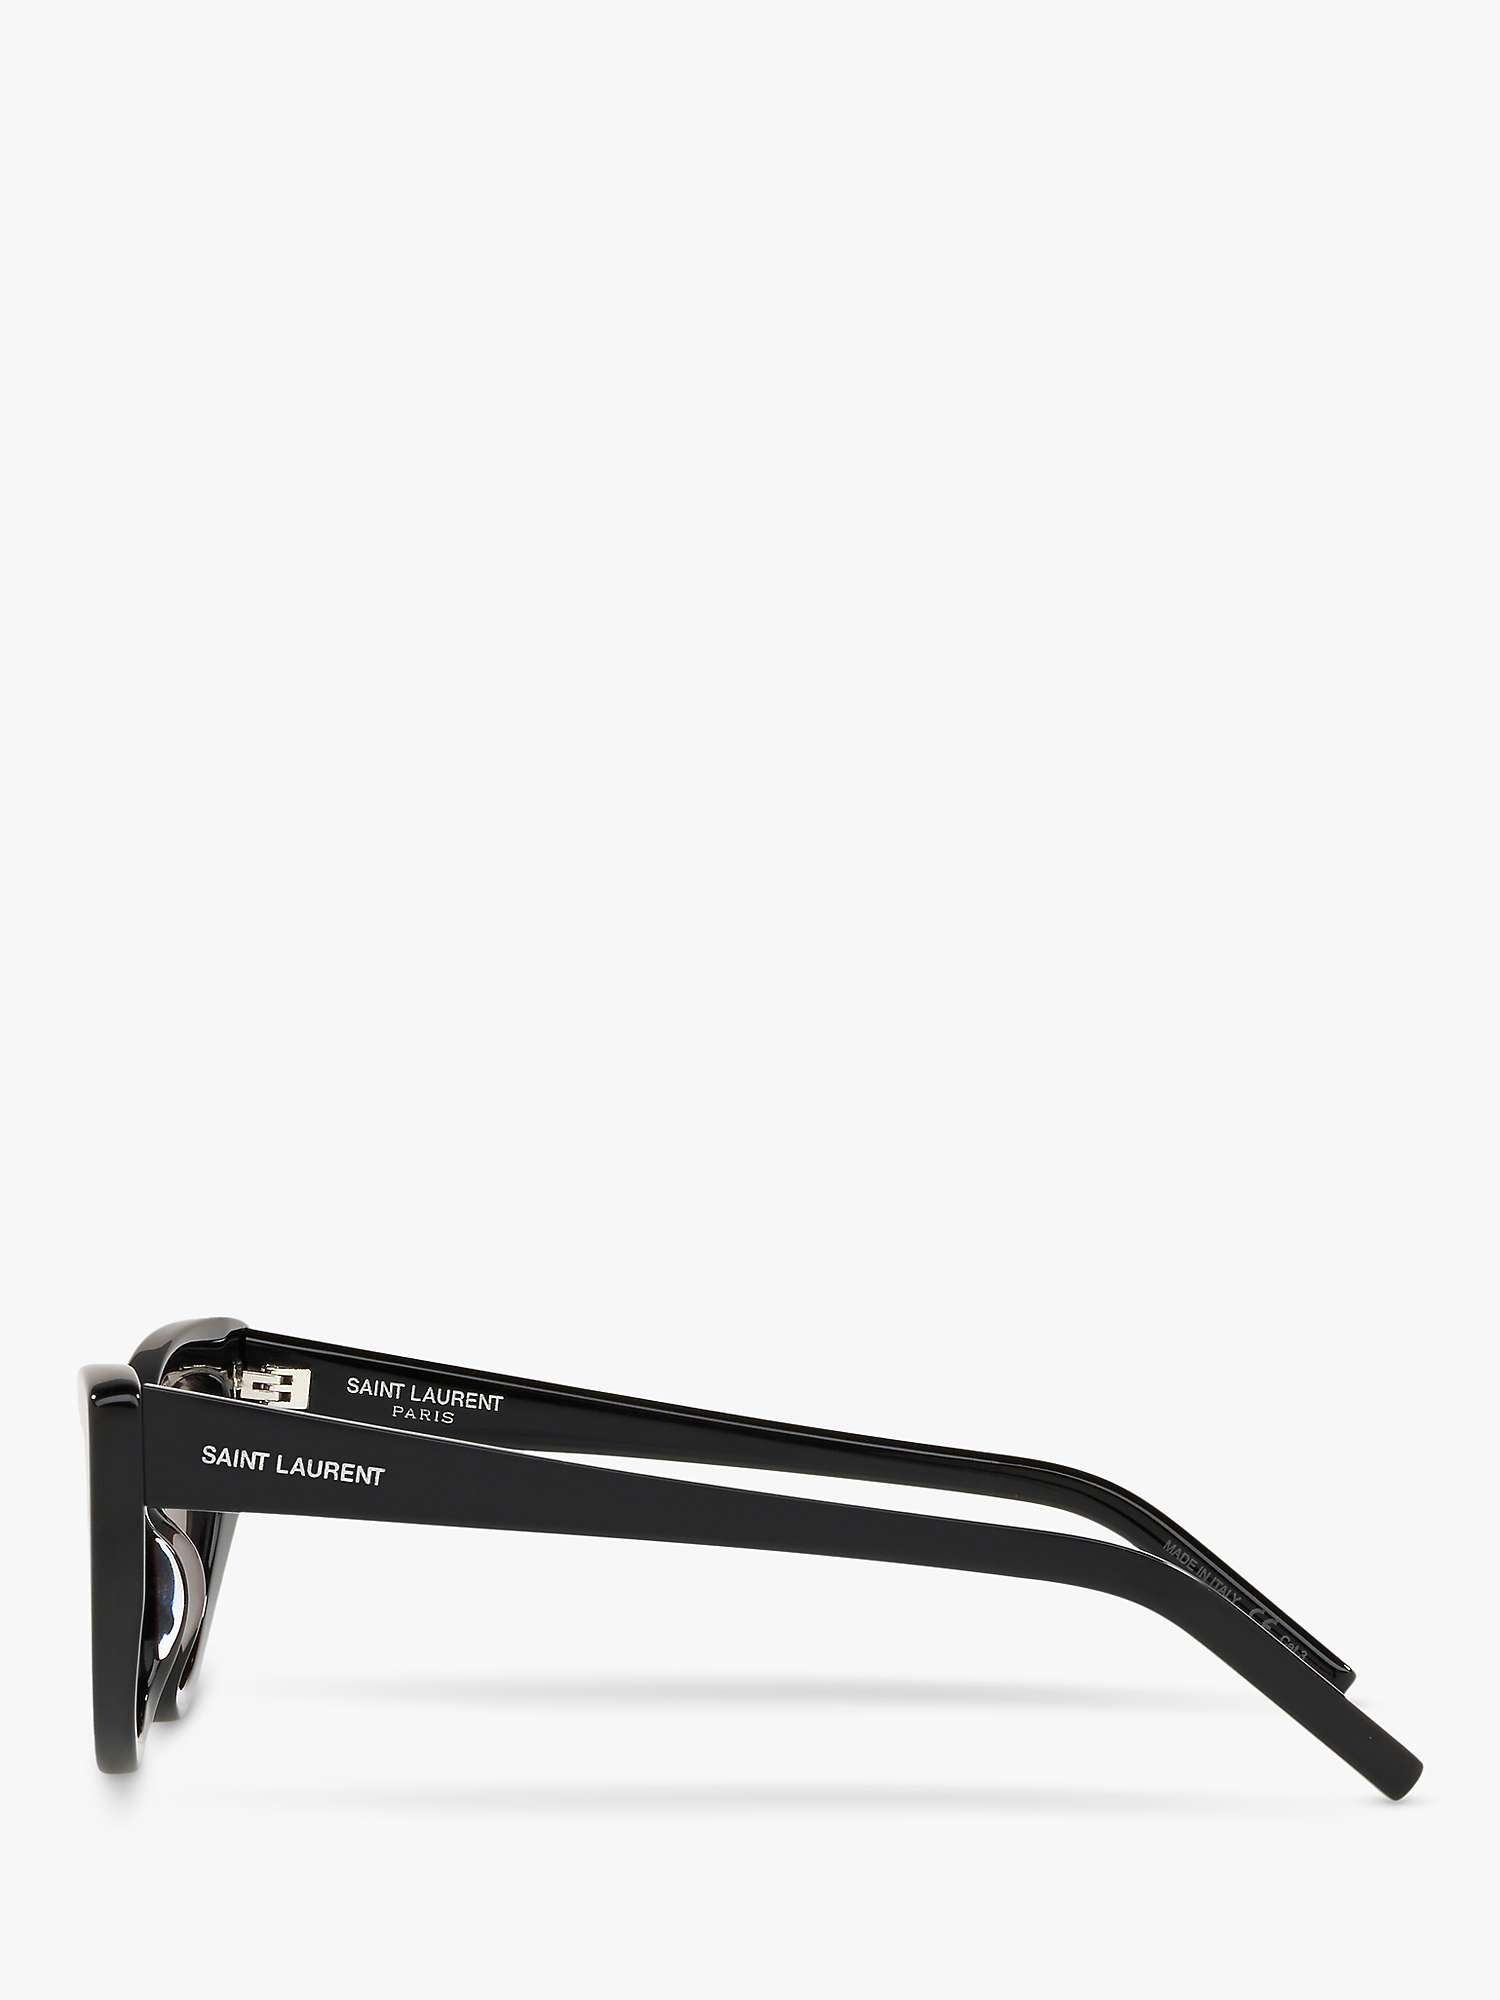 Buy Yves Saint Laurent SL 213 Women's Lily Cat's Eye Sunglasses, Shiny Black/Grey Online at johnlewis.com